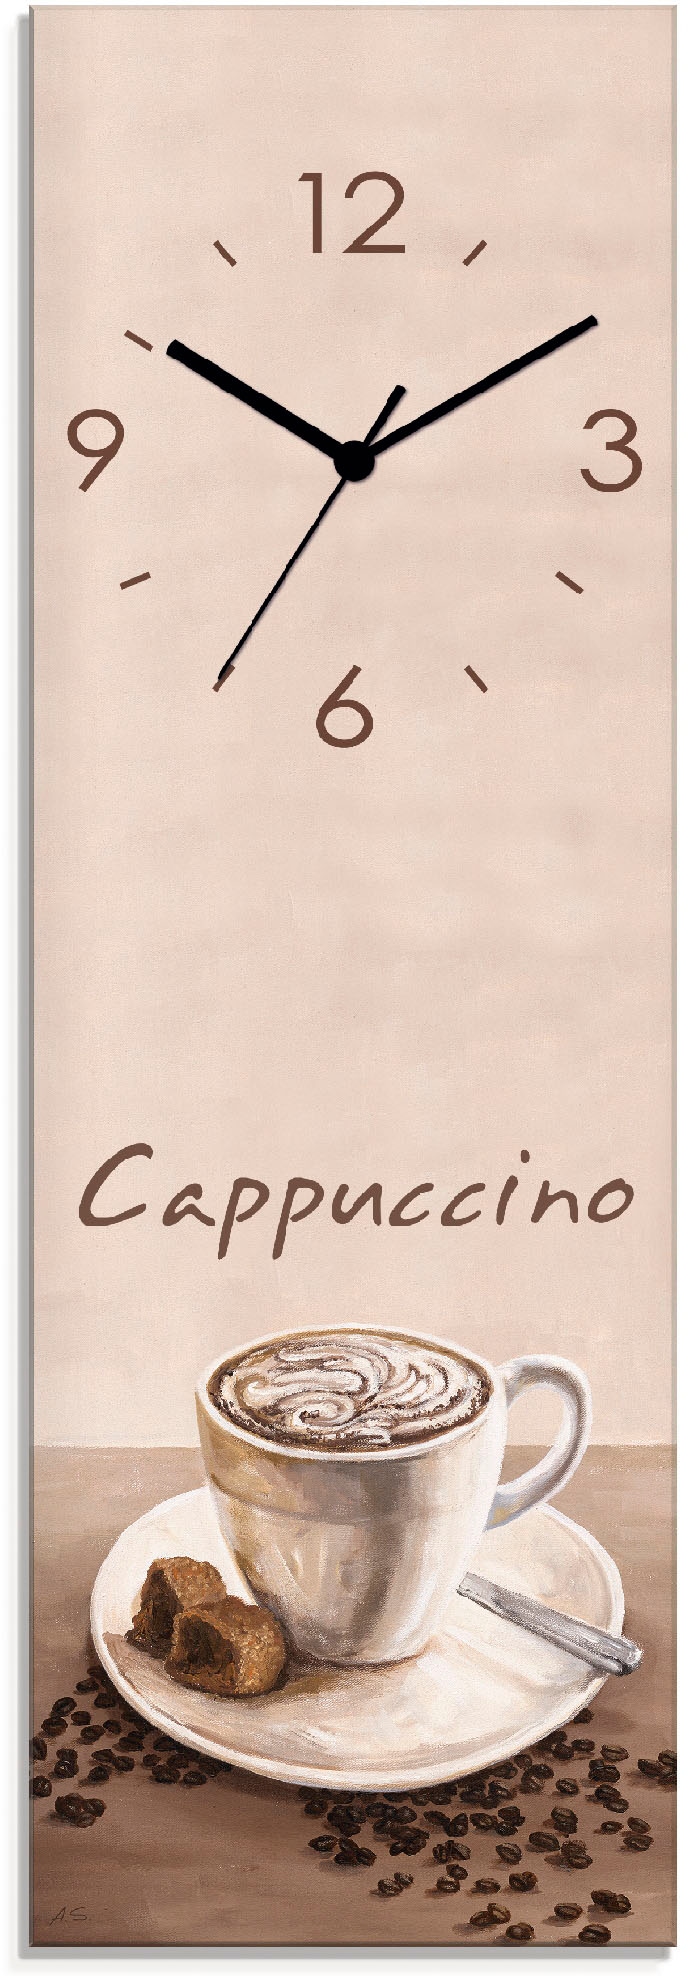 Artland Wanduhr "Cappuccino - Kaffee", wahlweise mit Quarz- oder Funkuhrwerk, lautlos ohne Tickgeräusche